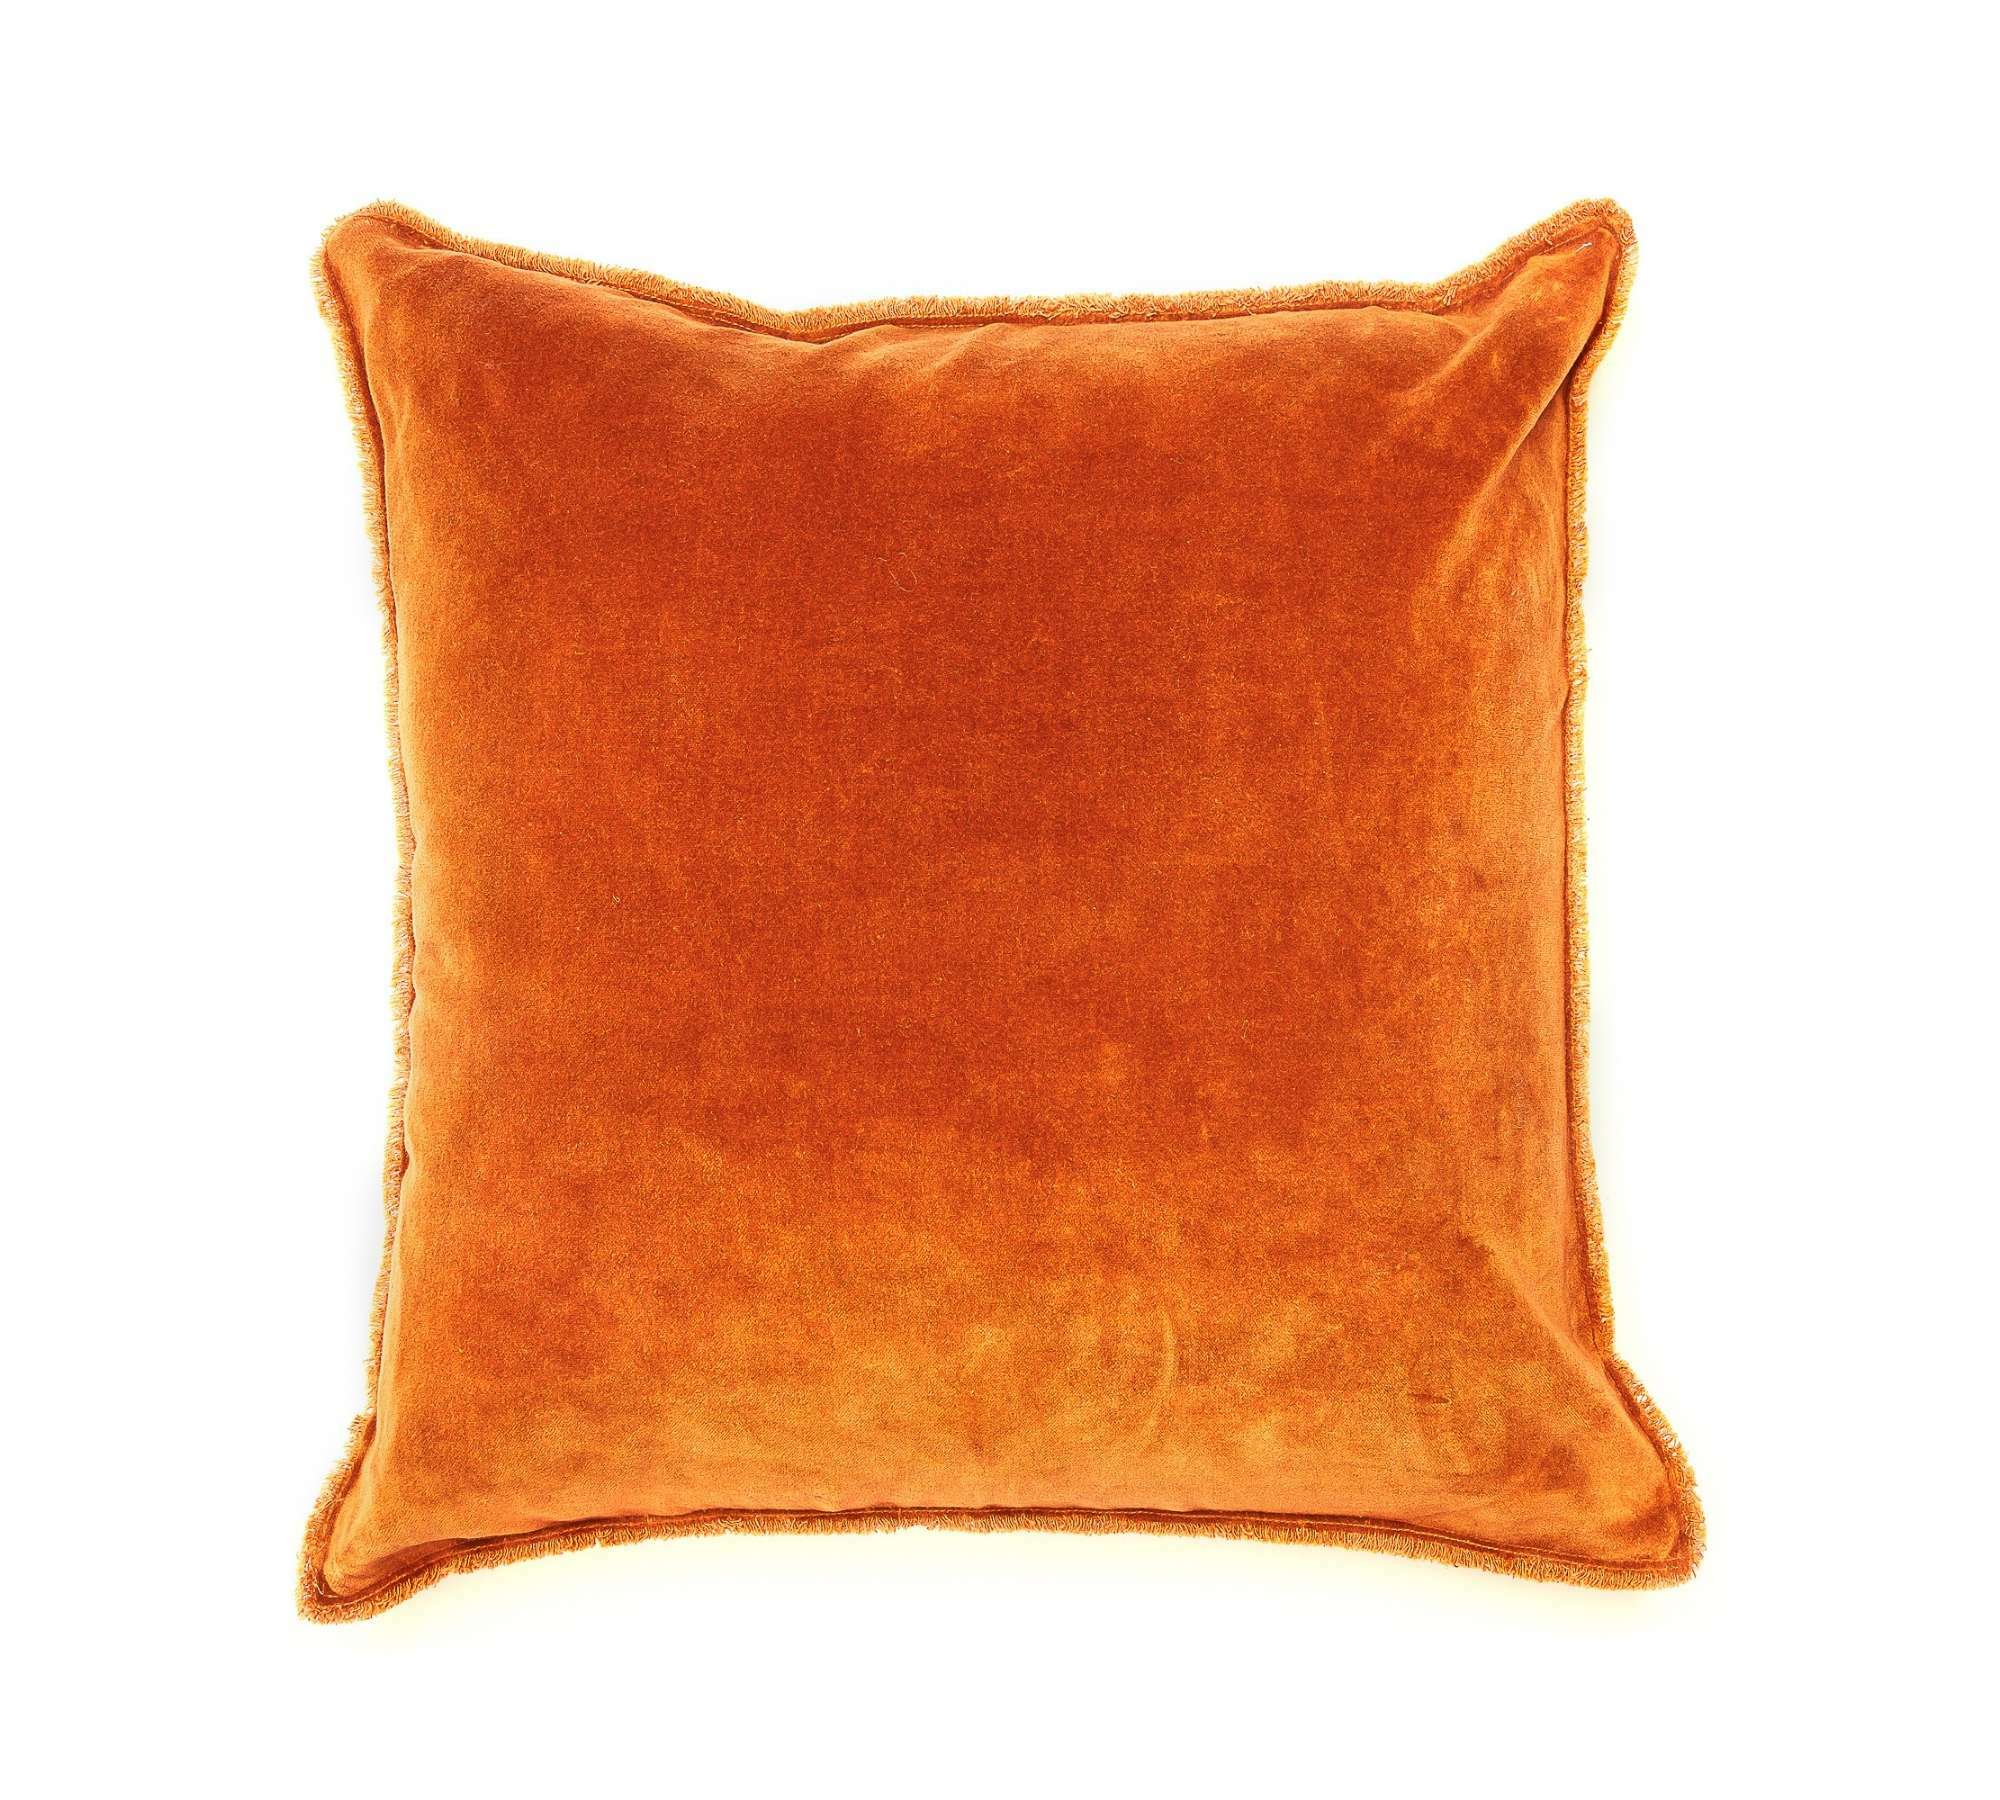 Kissenhülle Baumwolle Orange 60 x 60cm 0